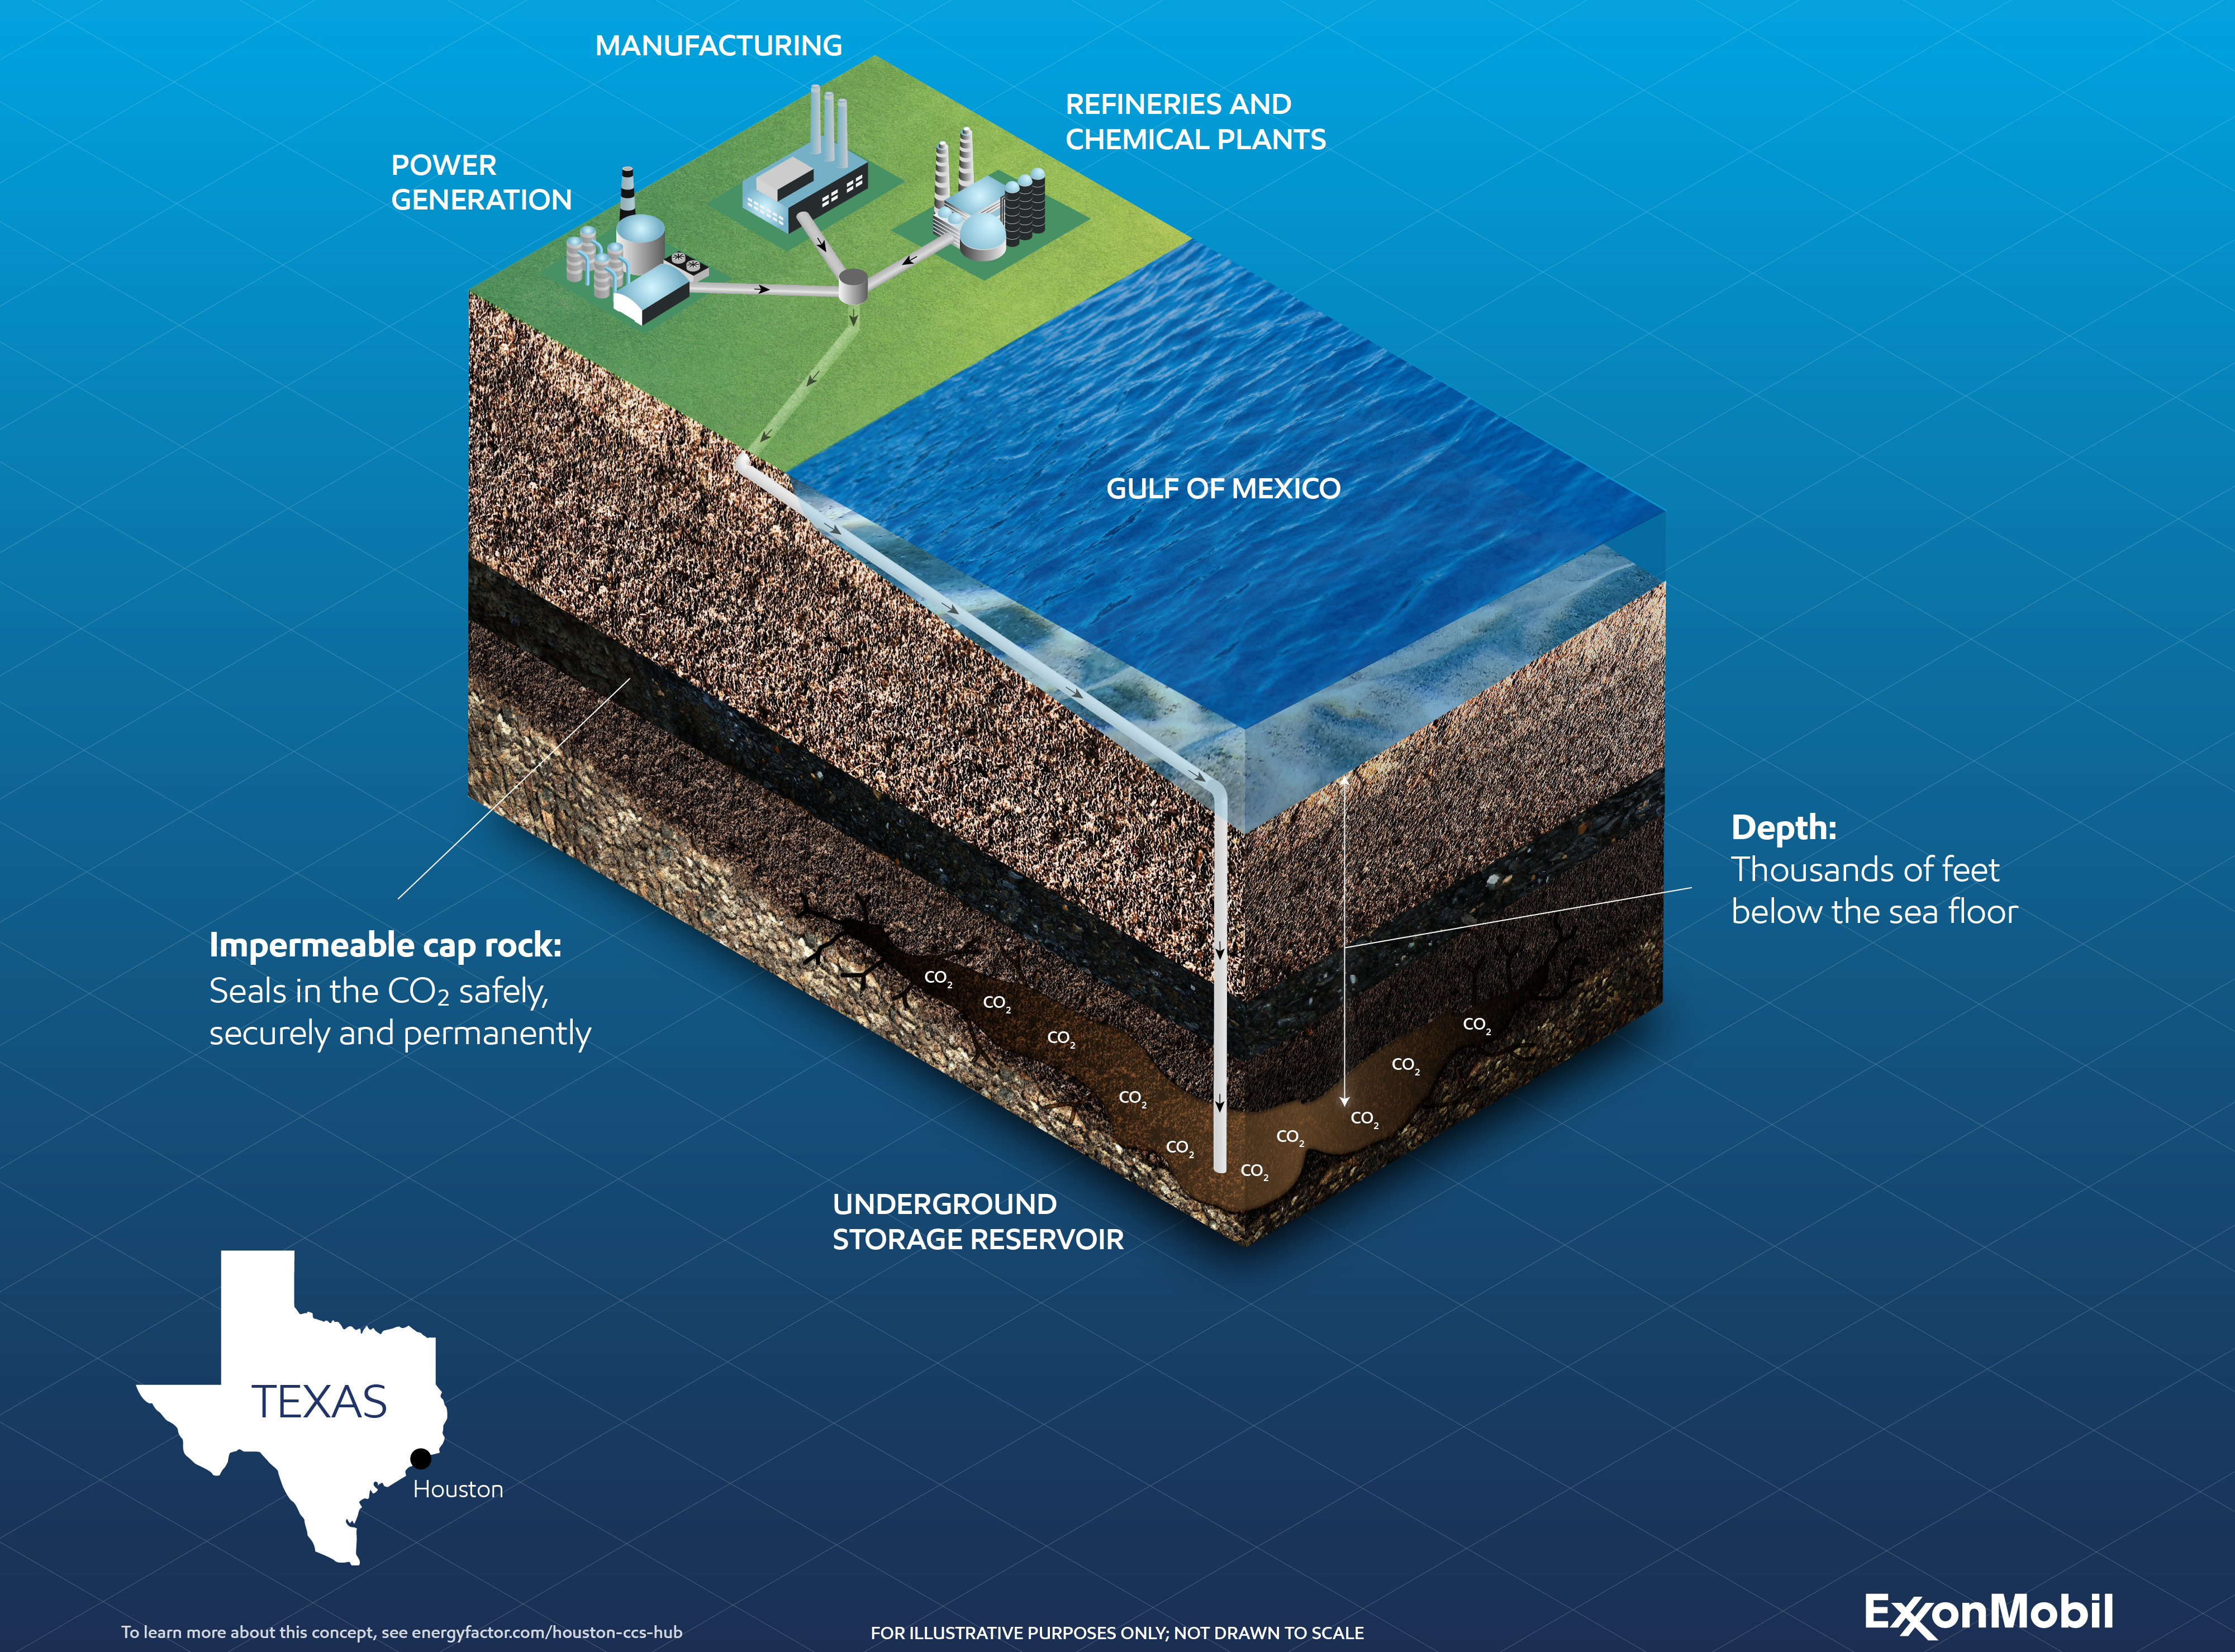 Exxon CCS project for proposed low-carbon hydrogen plant